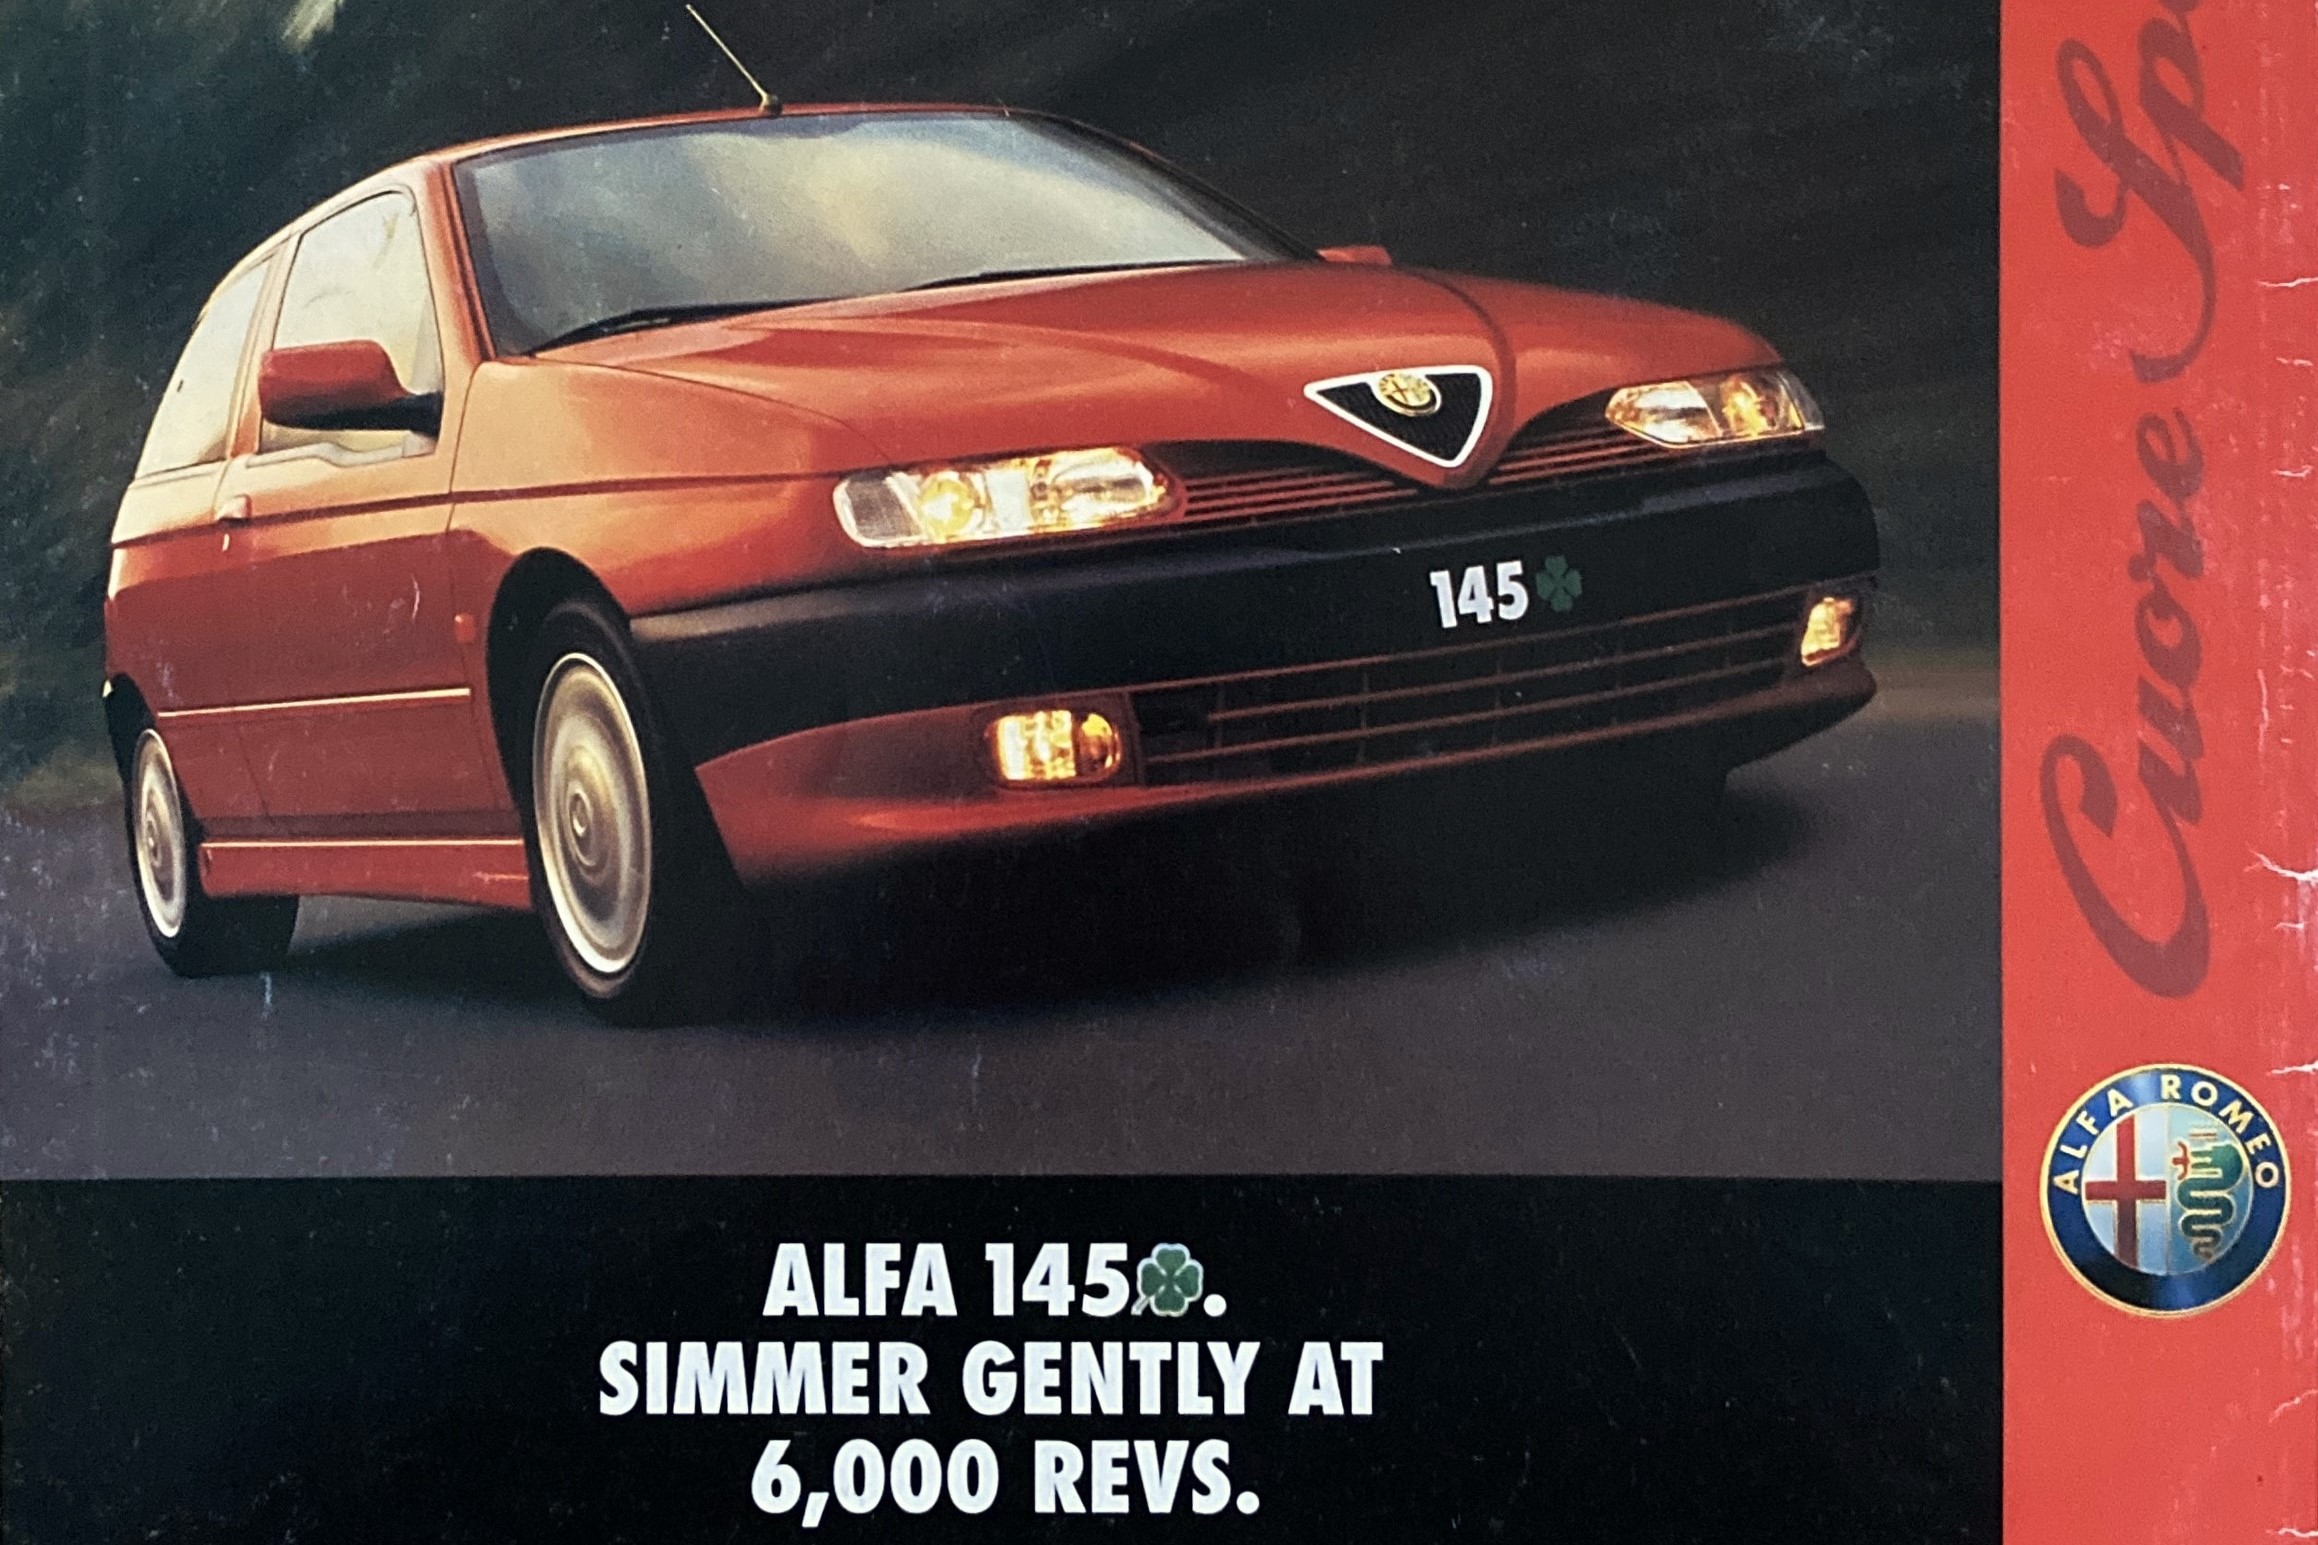 Ad Break: The Alfa Romeo 145 Cloverleaf needed oven gloves